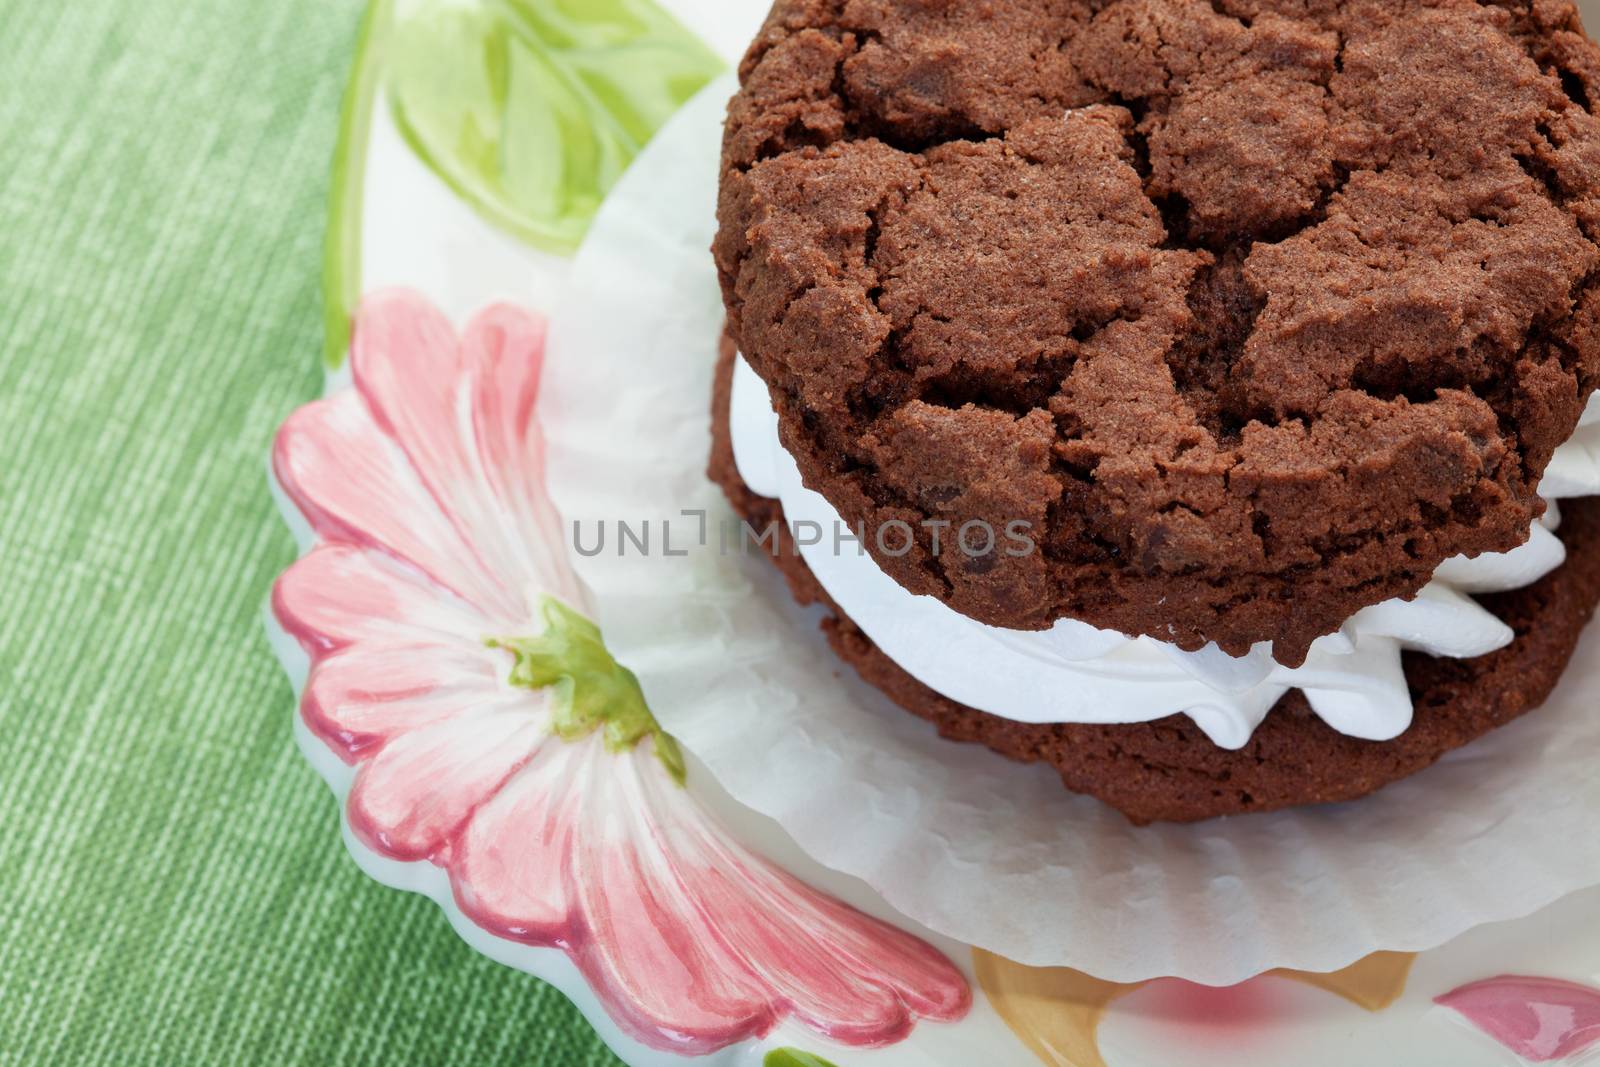 A soft, rich chocolate cream filled cookie.